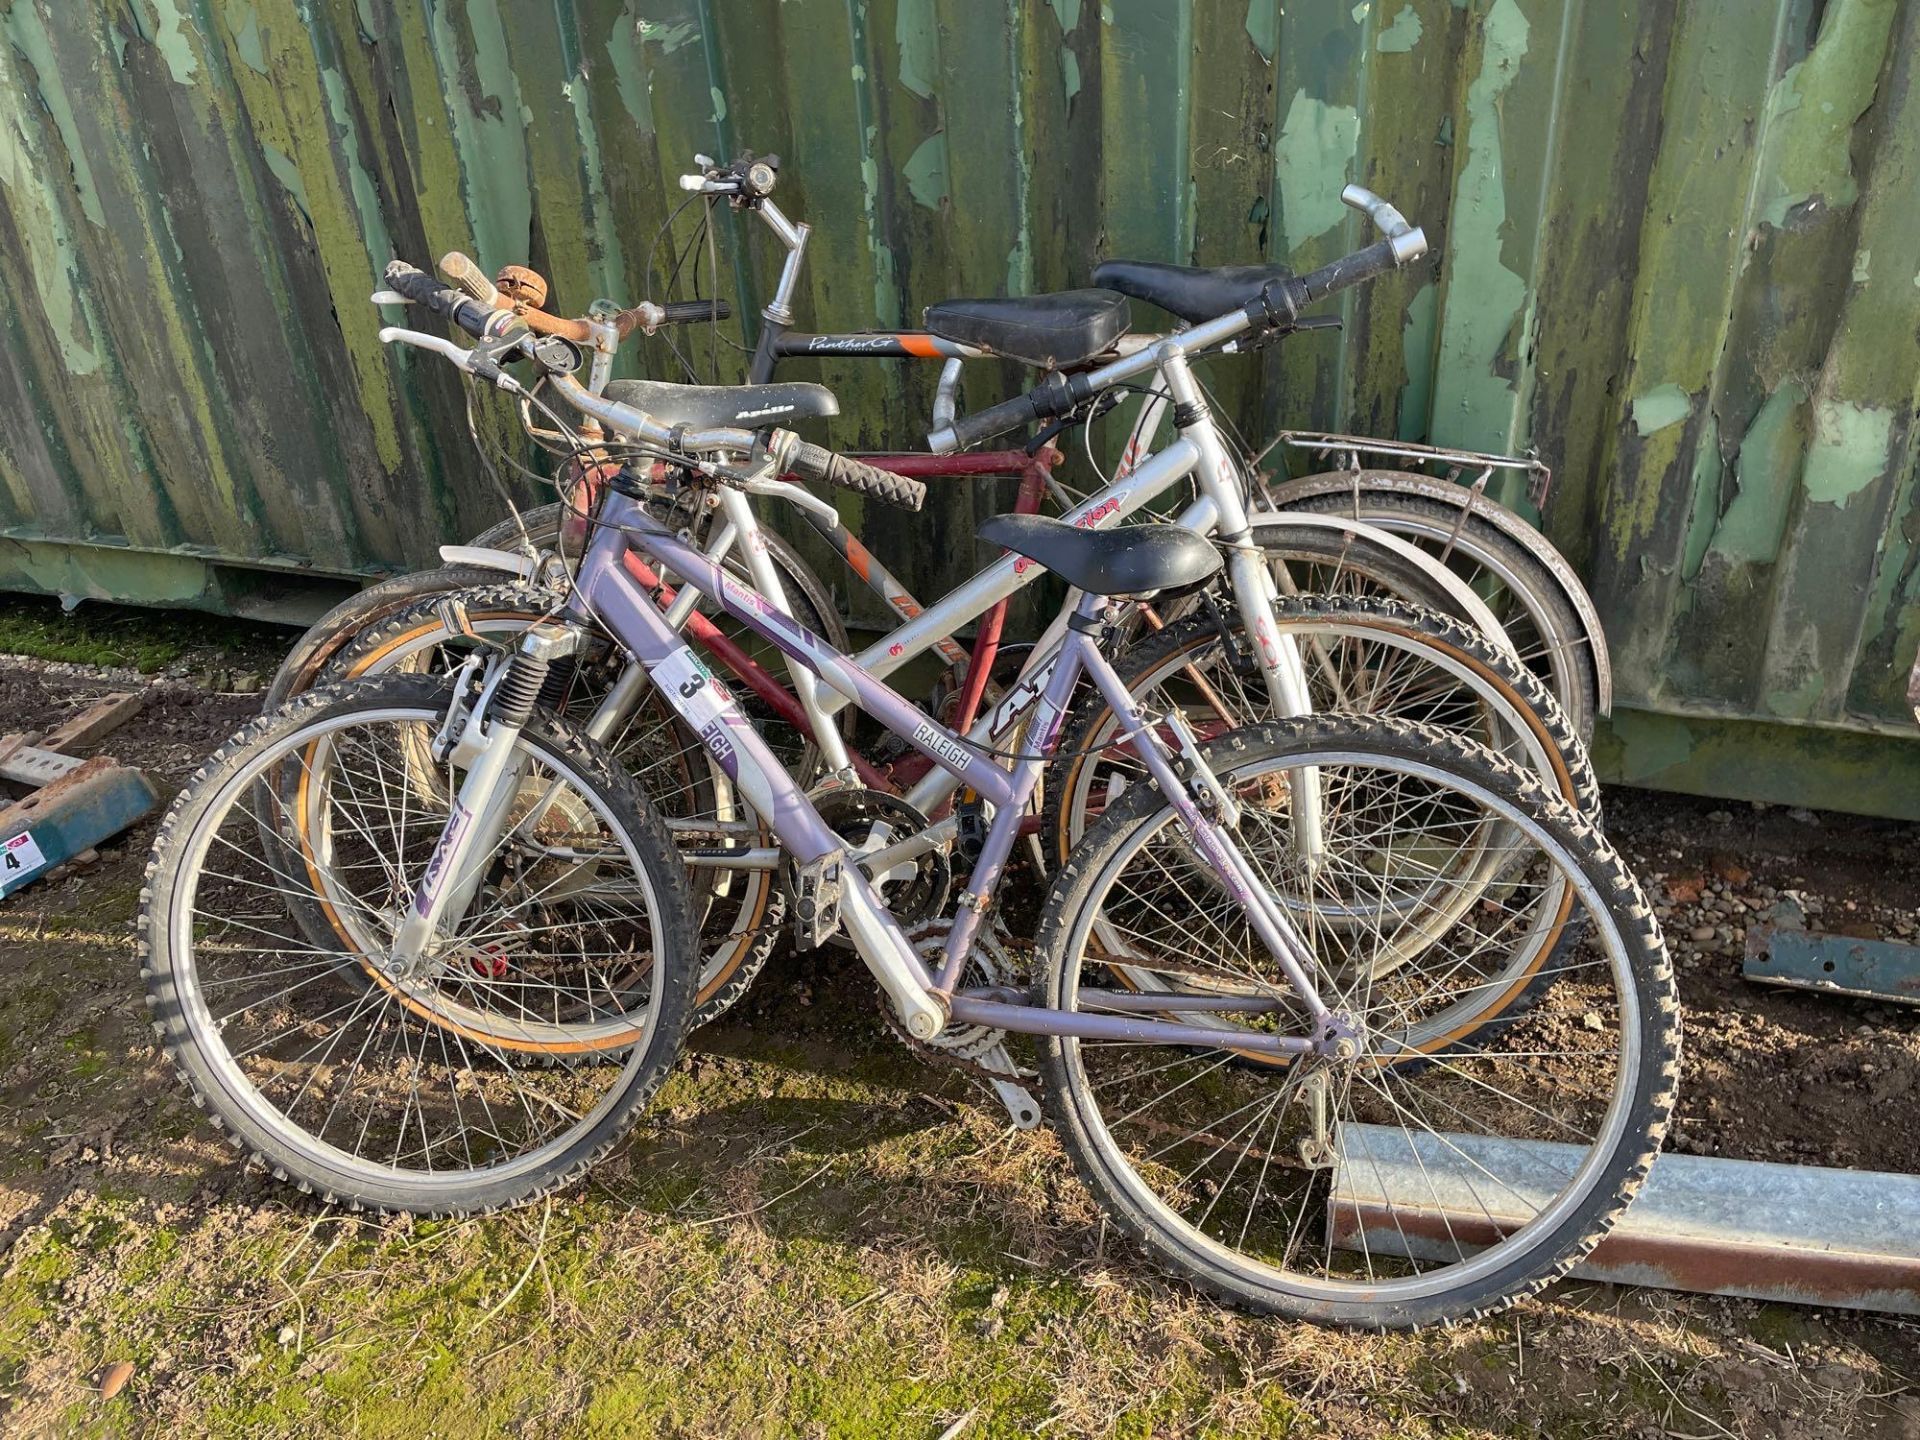 Quantity bikes